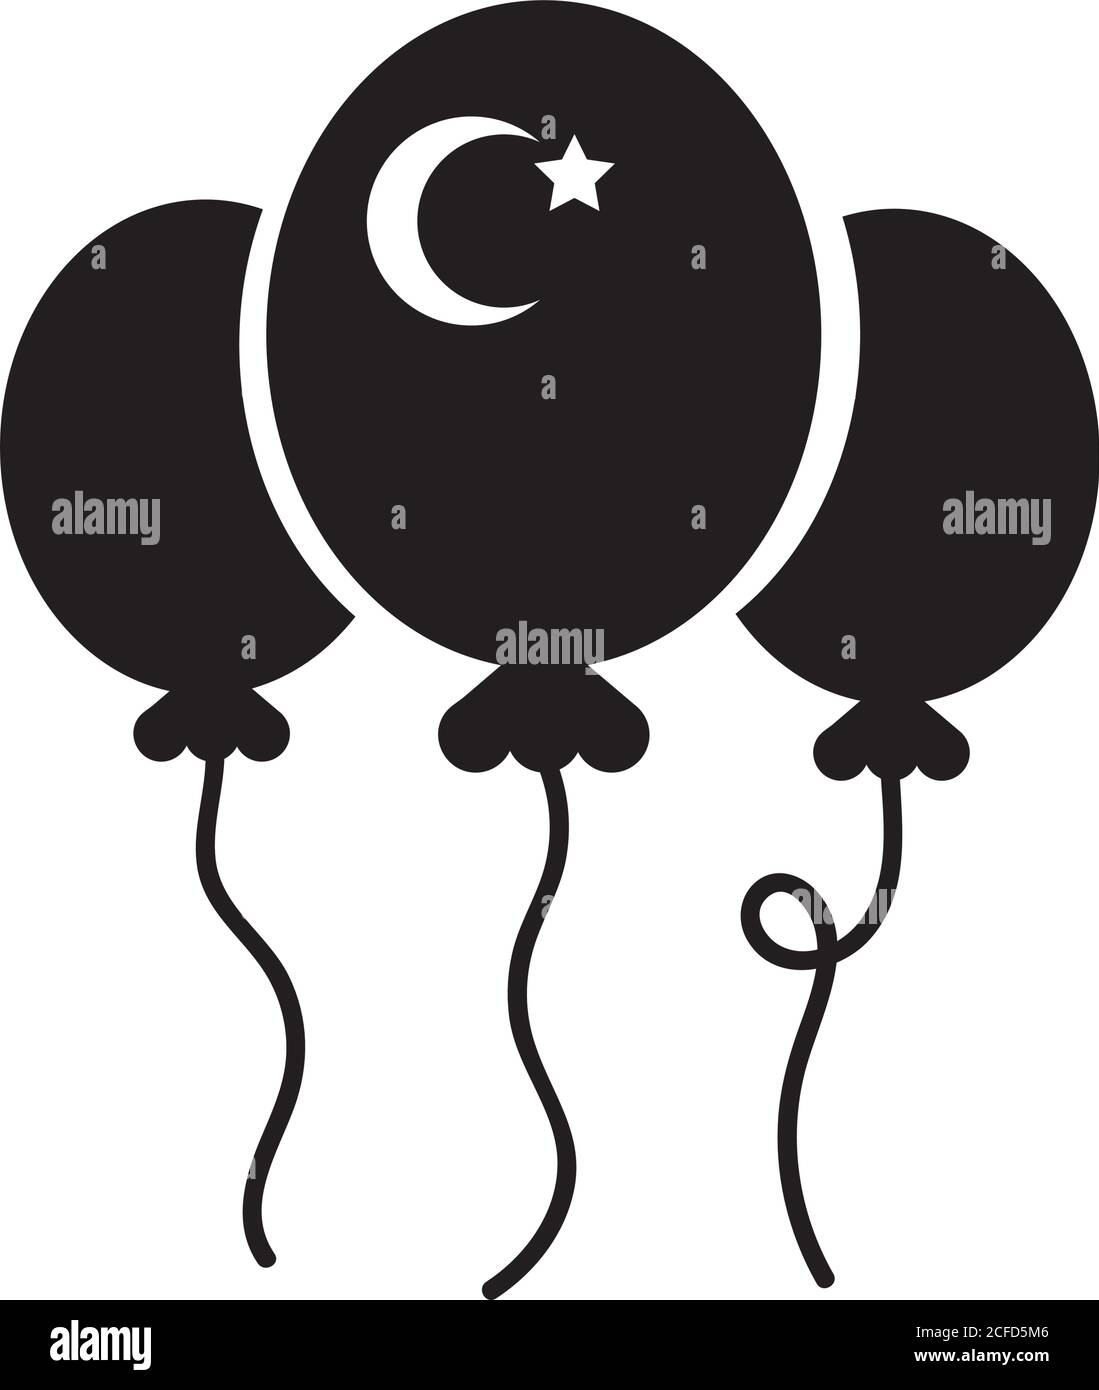 cumhuriyet bayrami moon and star symbol in balloons helium silhouette style vector illustration design Stock Vector